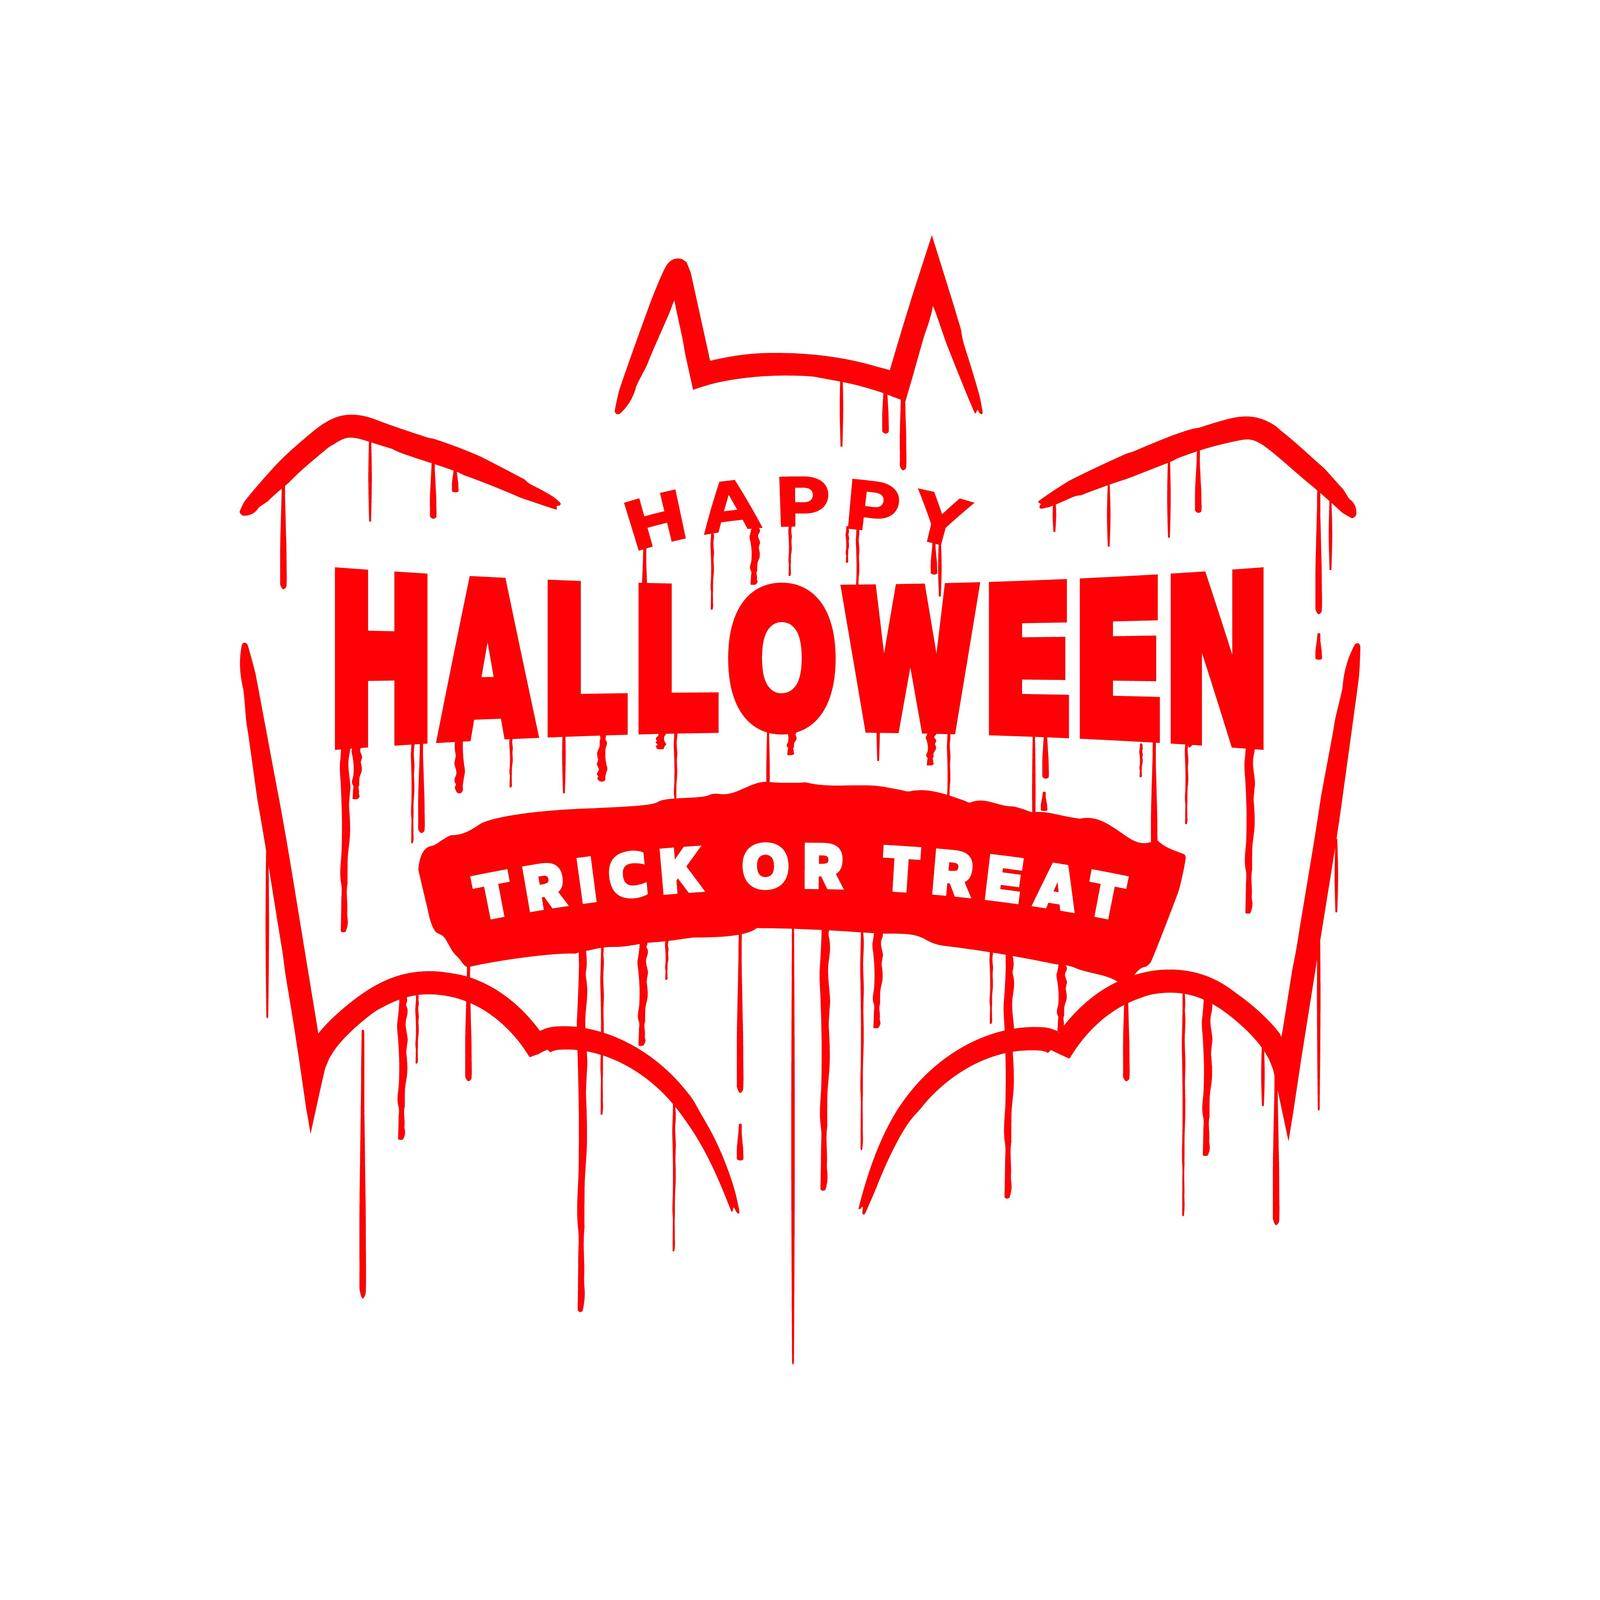 Happy halloween trick or treat  lettering. Happy halloween text banner.